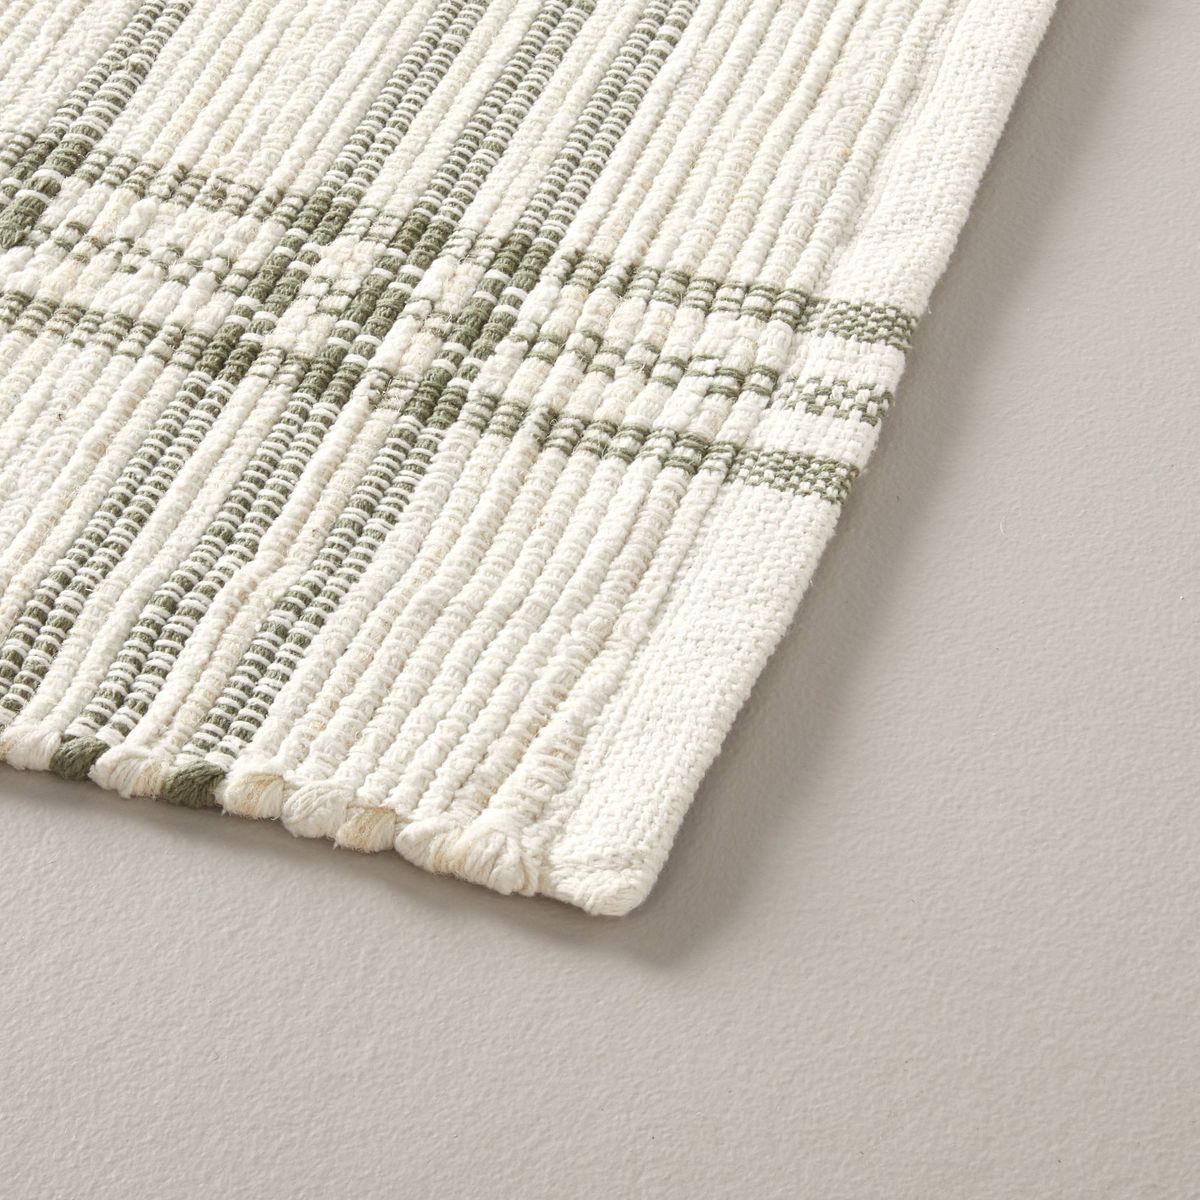 Tri-Stripe Plaid Handmade Woven Area Rug Green/Cream - Hearth & Hand™ with Magnolia | Target